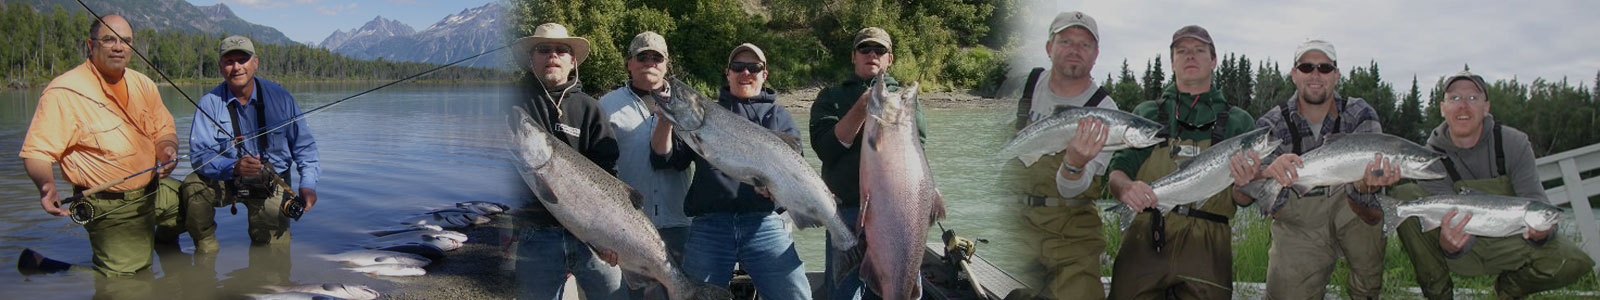 Alaska Salmon Fishing Guides